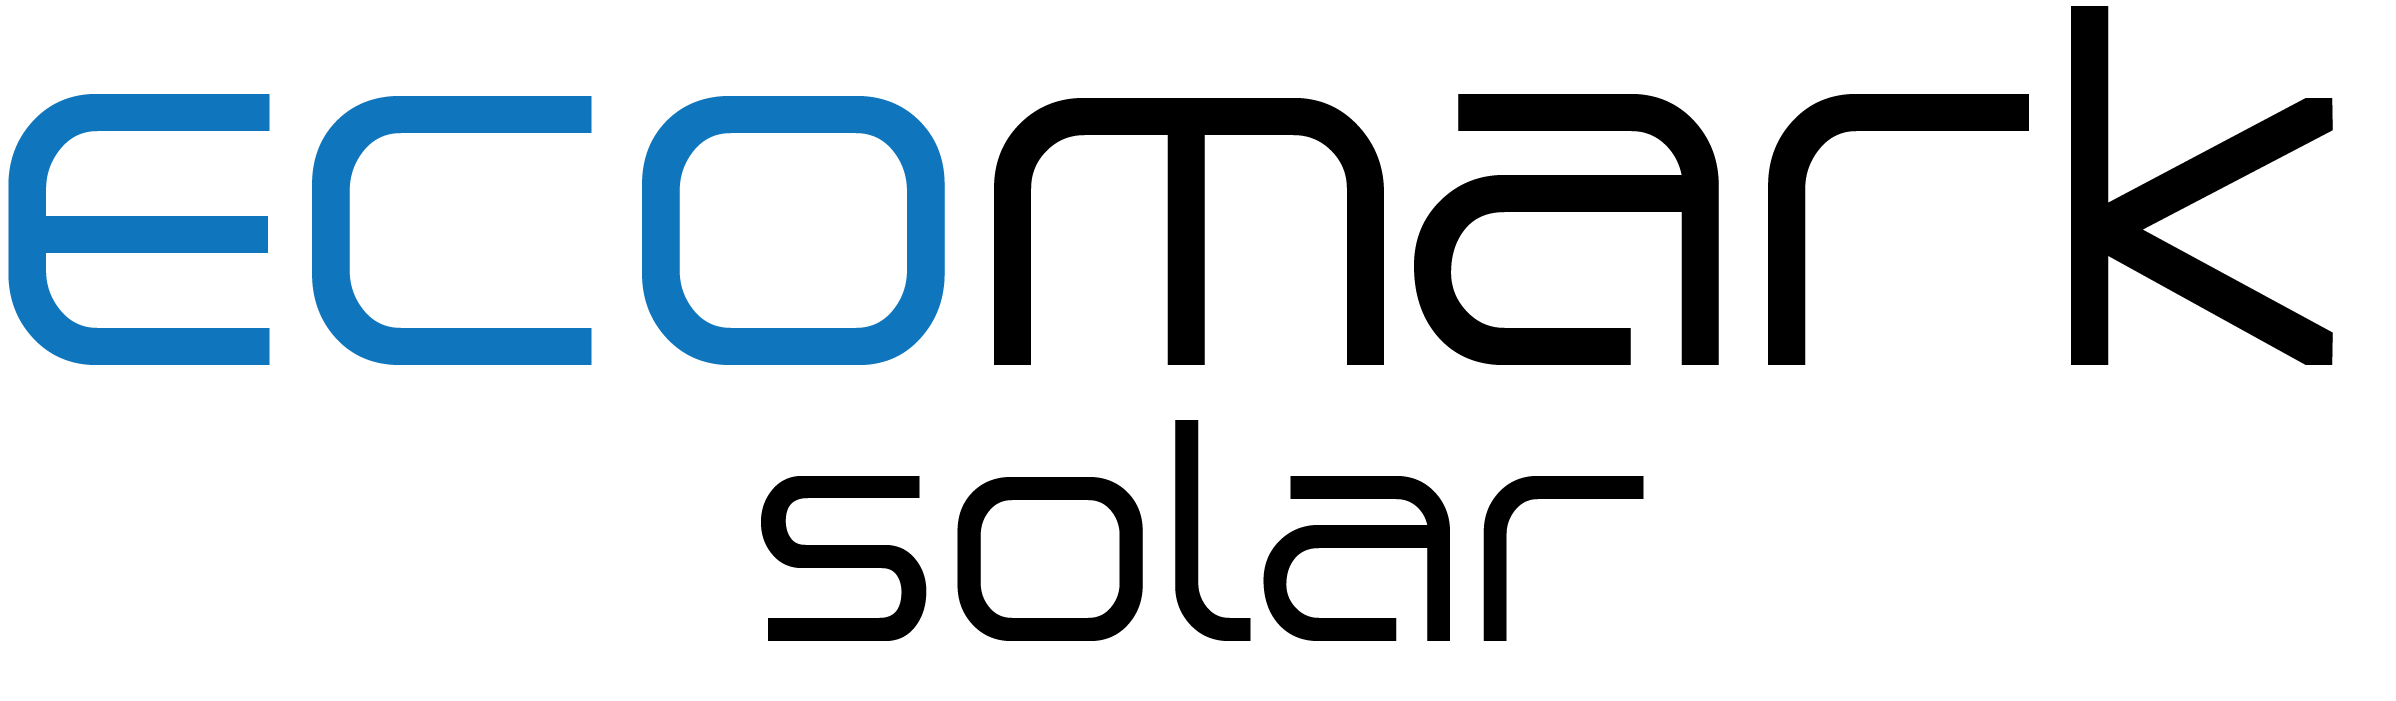 Ecomark Solar